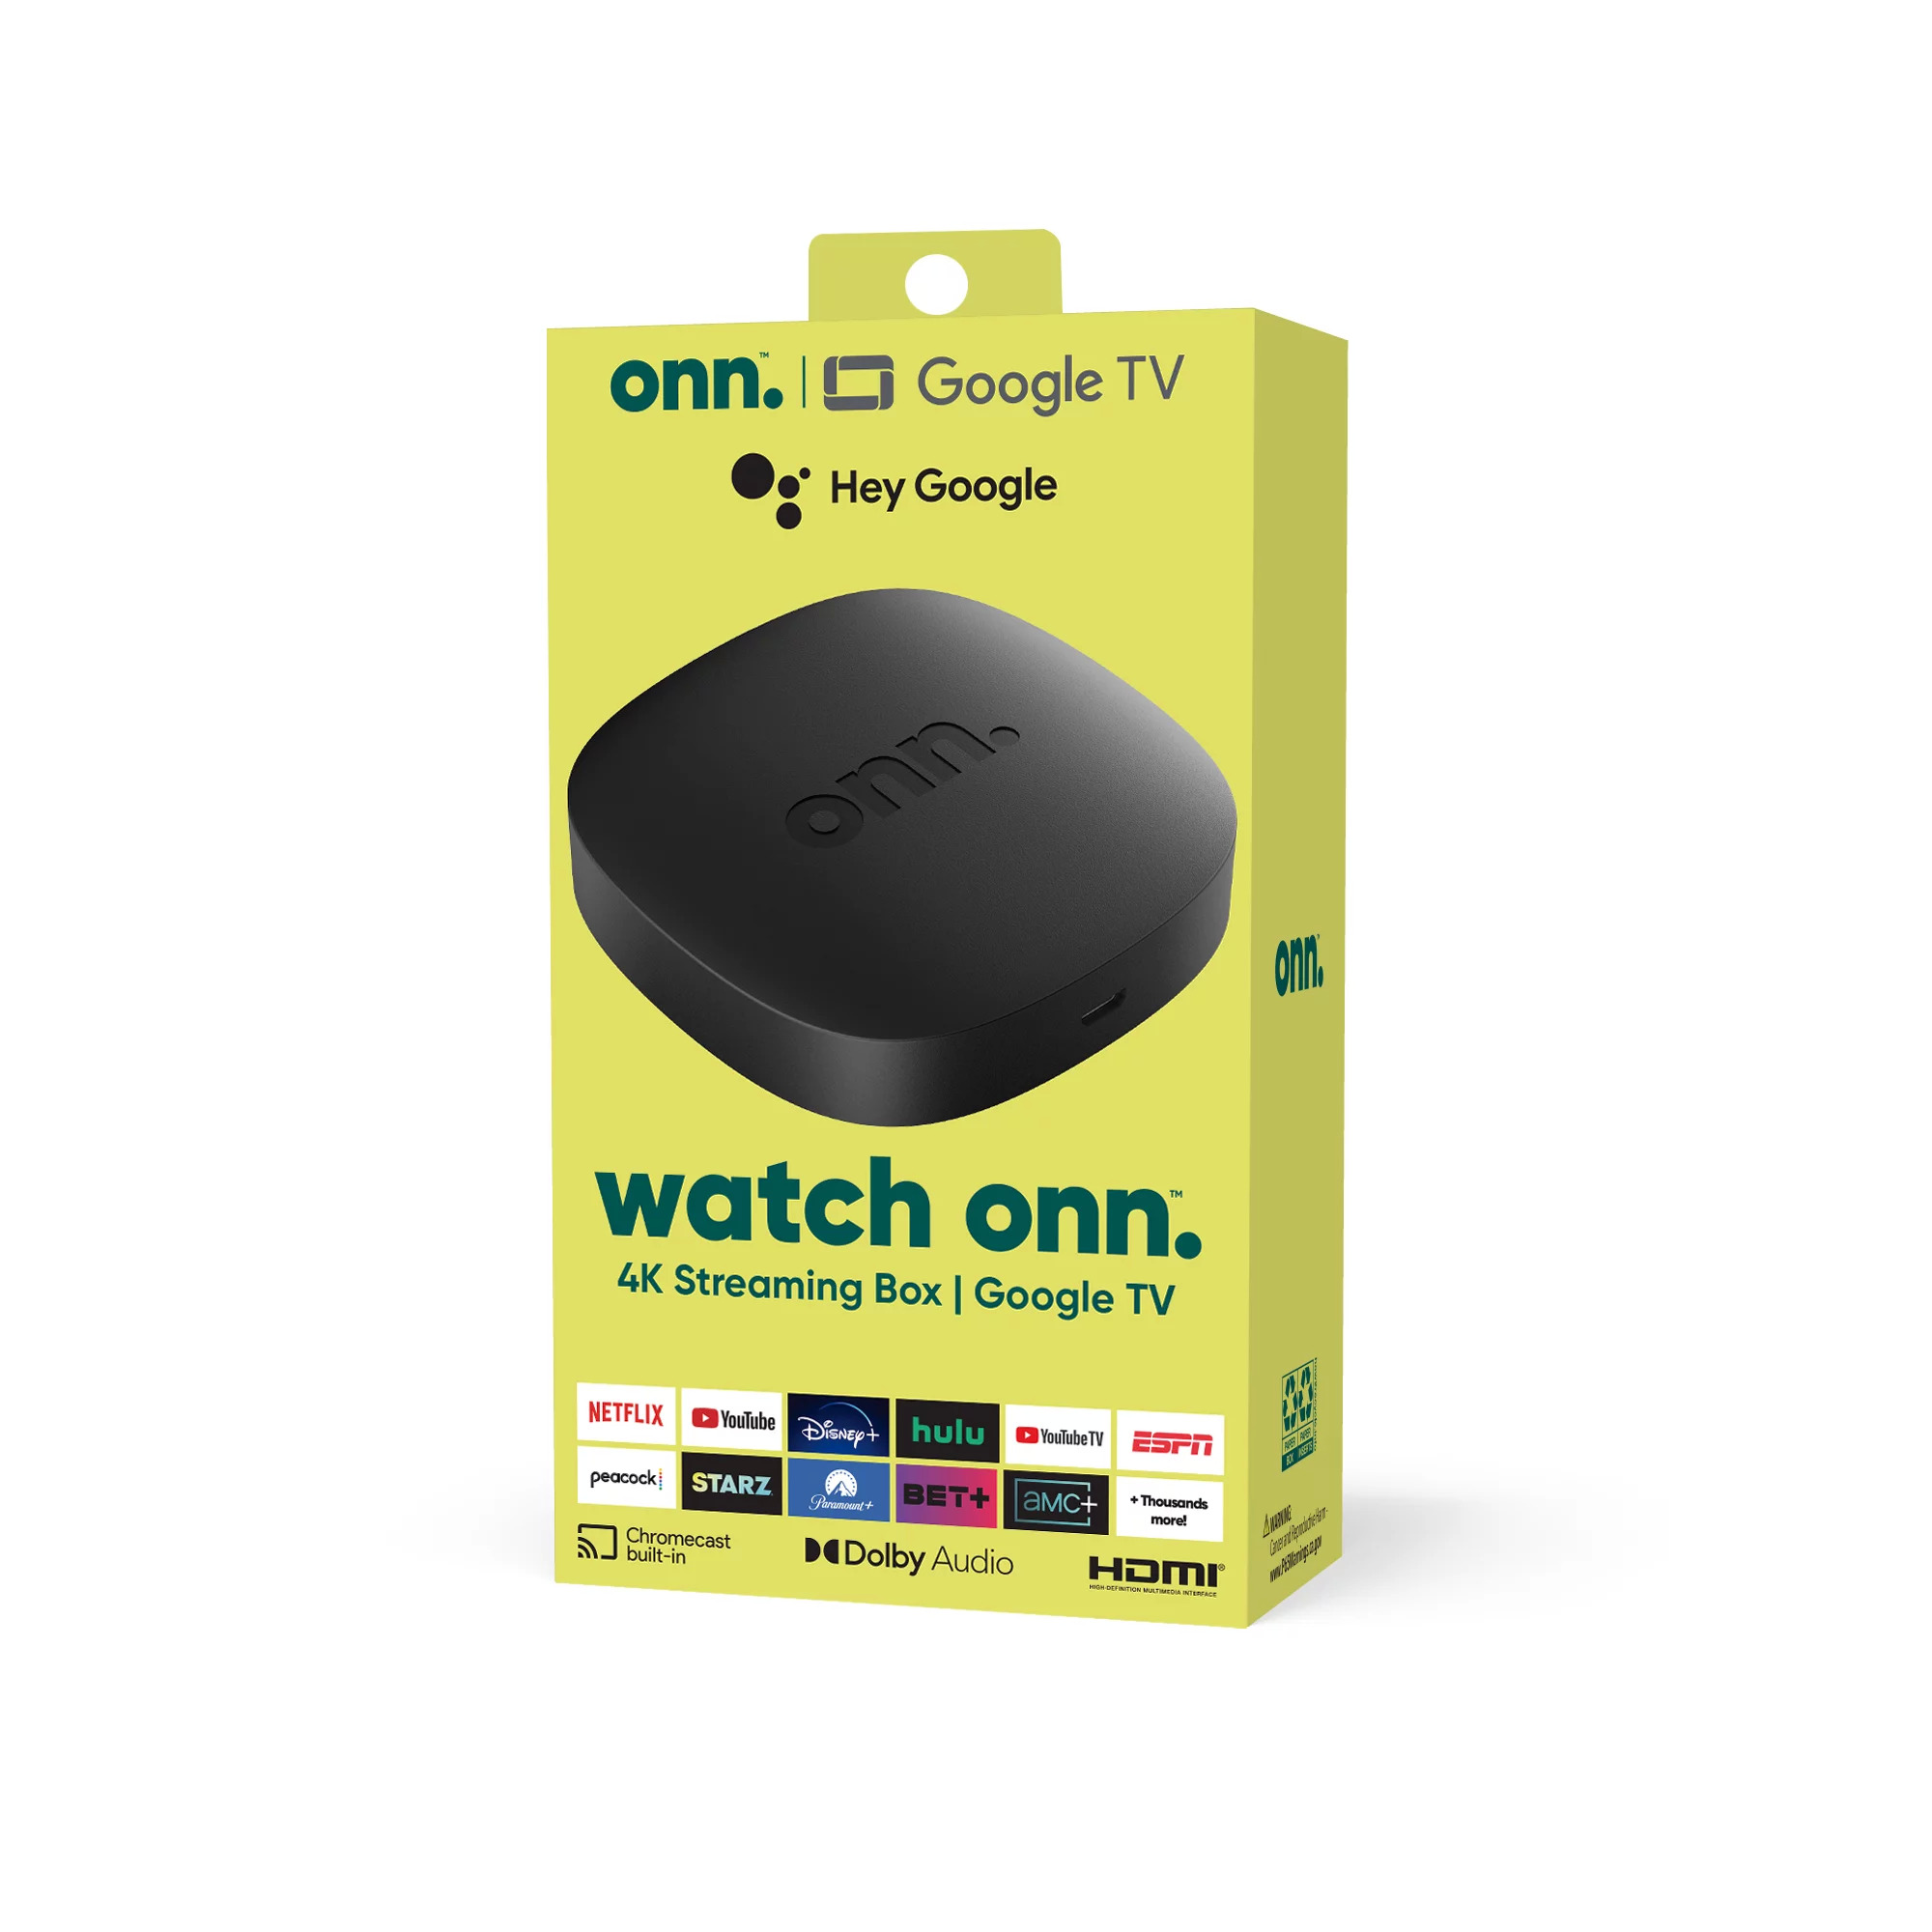 onn. Google TV 4K Streaming Box (New, 2023), 4K UHD resolution $19.88